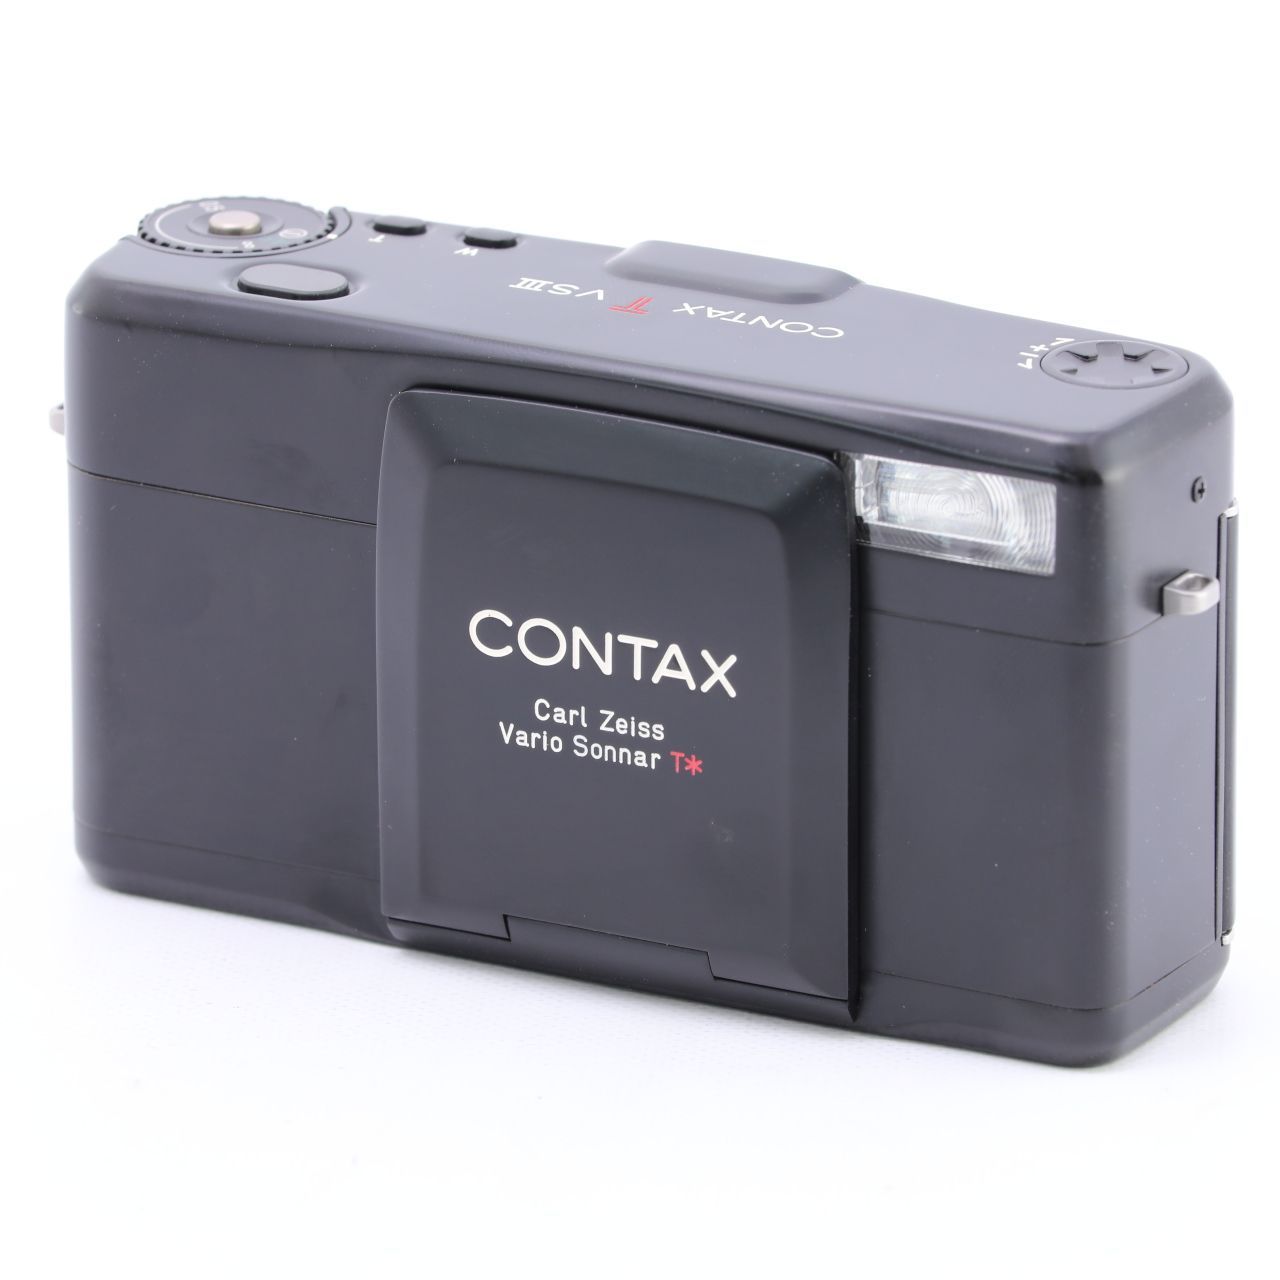 CONTAX TVS3 即購入禁止 コメント下さい - フィルムカメラ